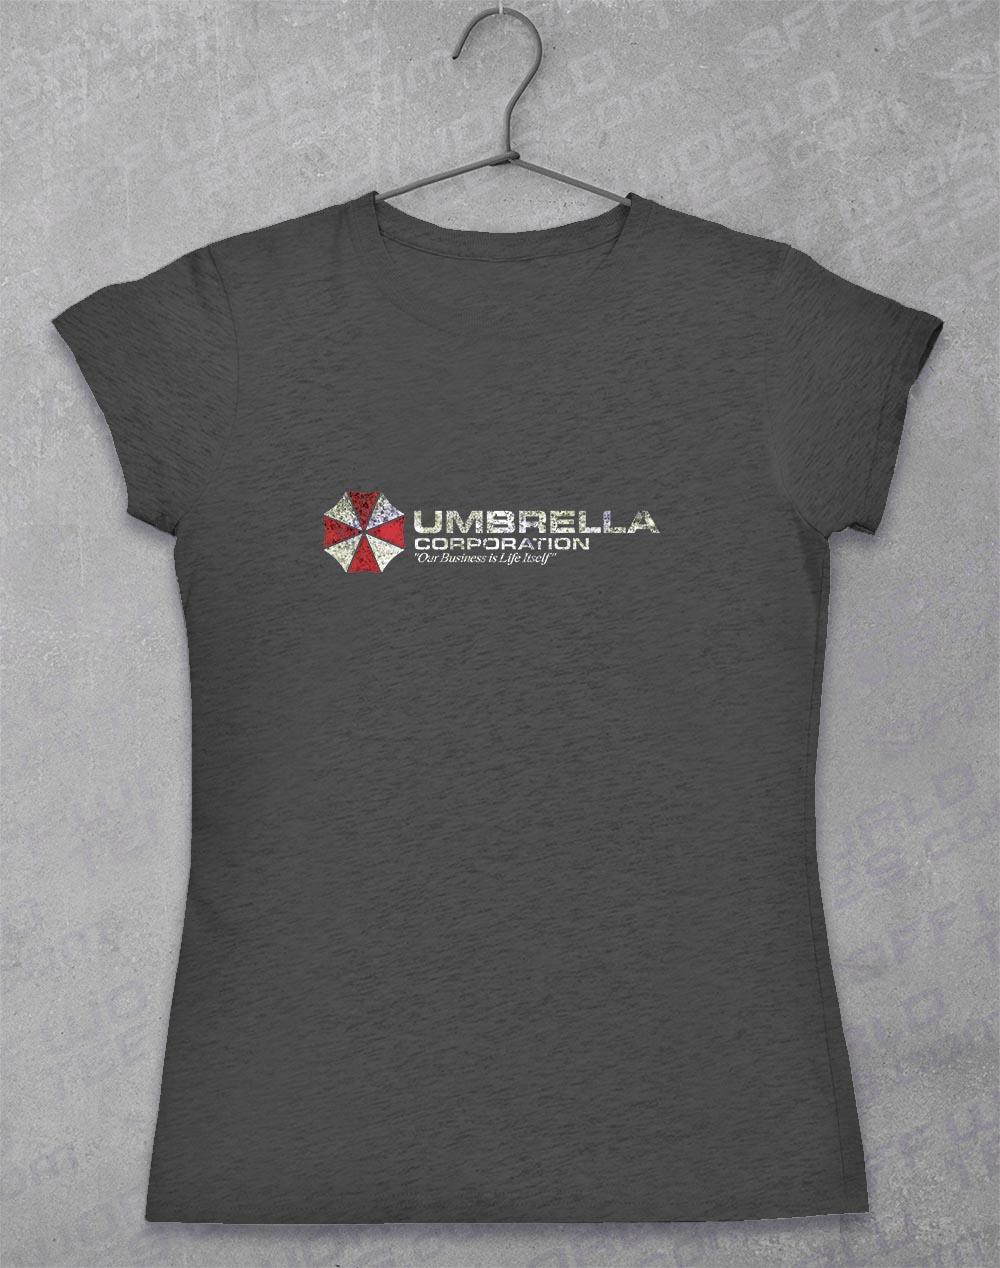 Umbrella Corporation - Women's T-Shirt 8-10 / Dark Heather  - Off World Tees